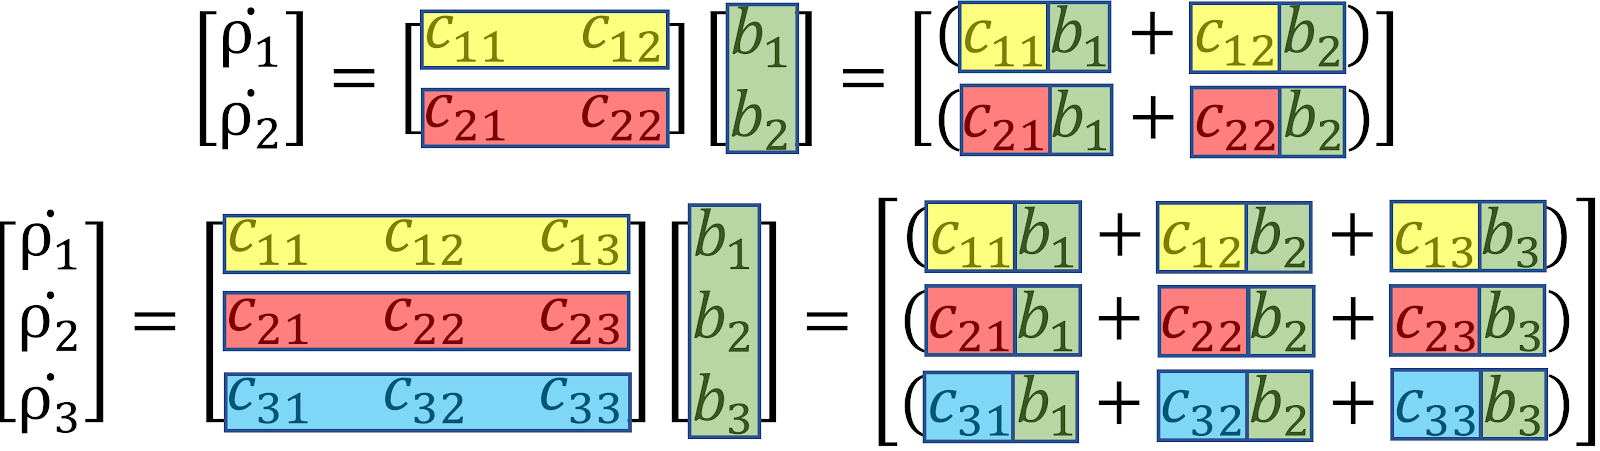 Matrix multiplication diagram